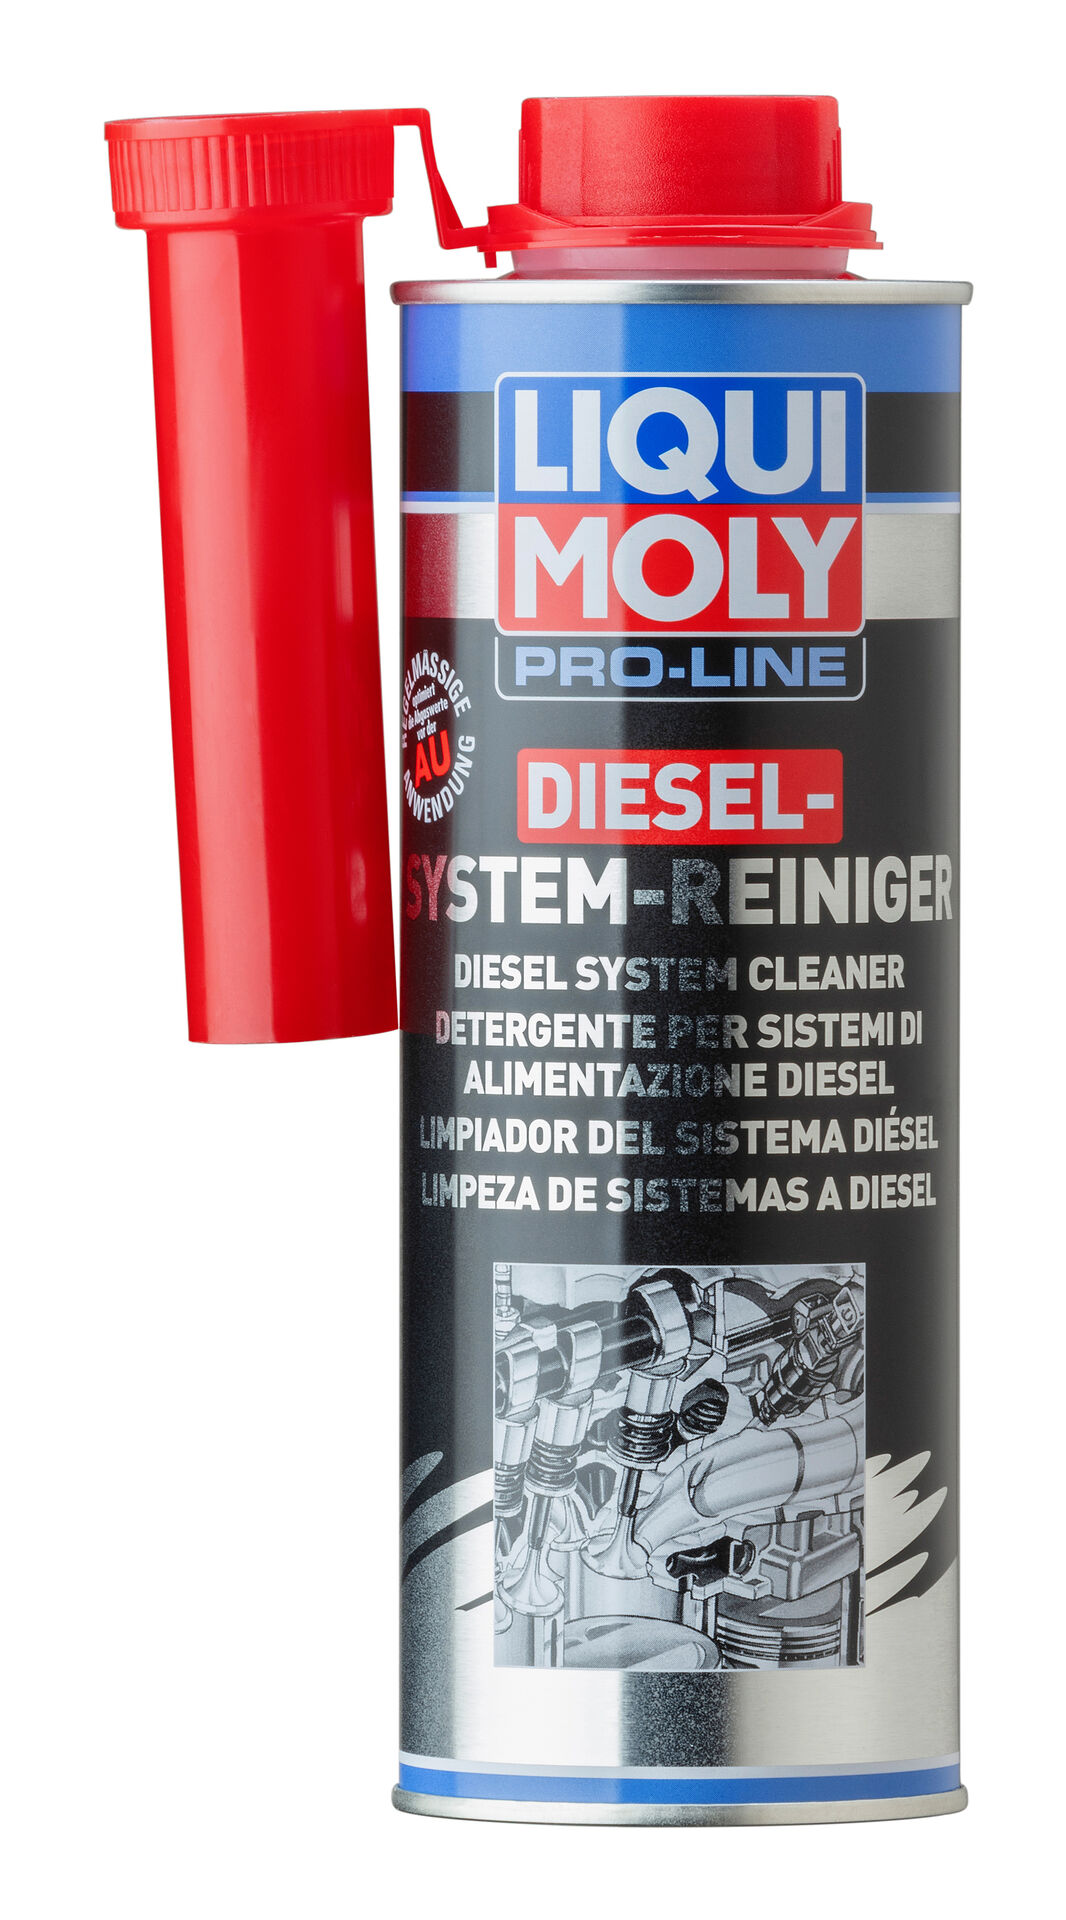  Liqui Moly 5156 1x500 ml Dose Pro-Line Diesel System Reiniger